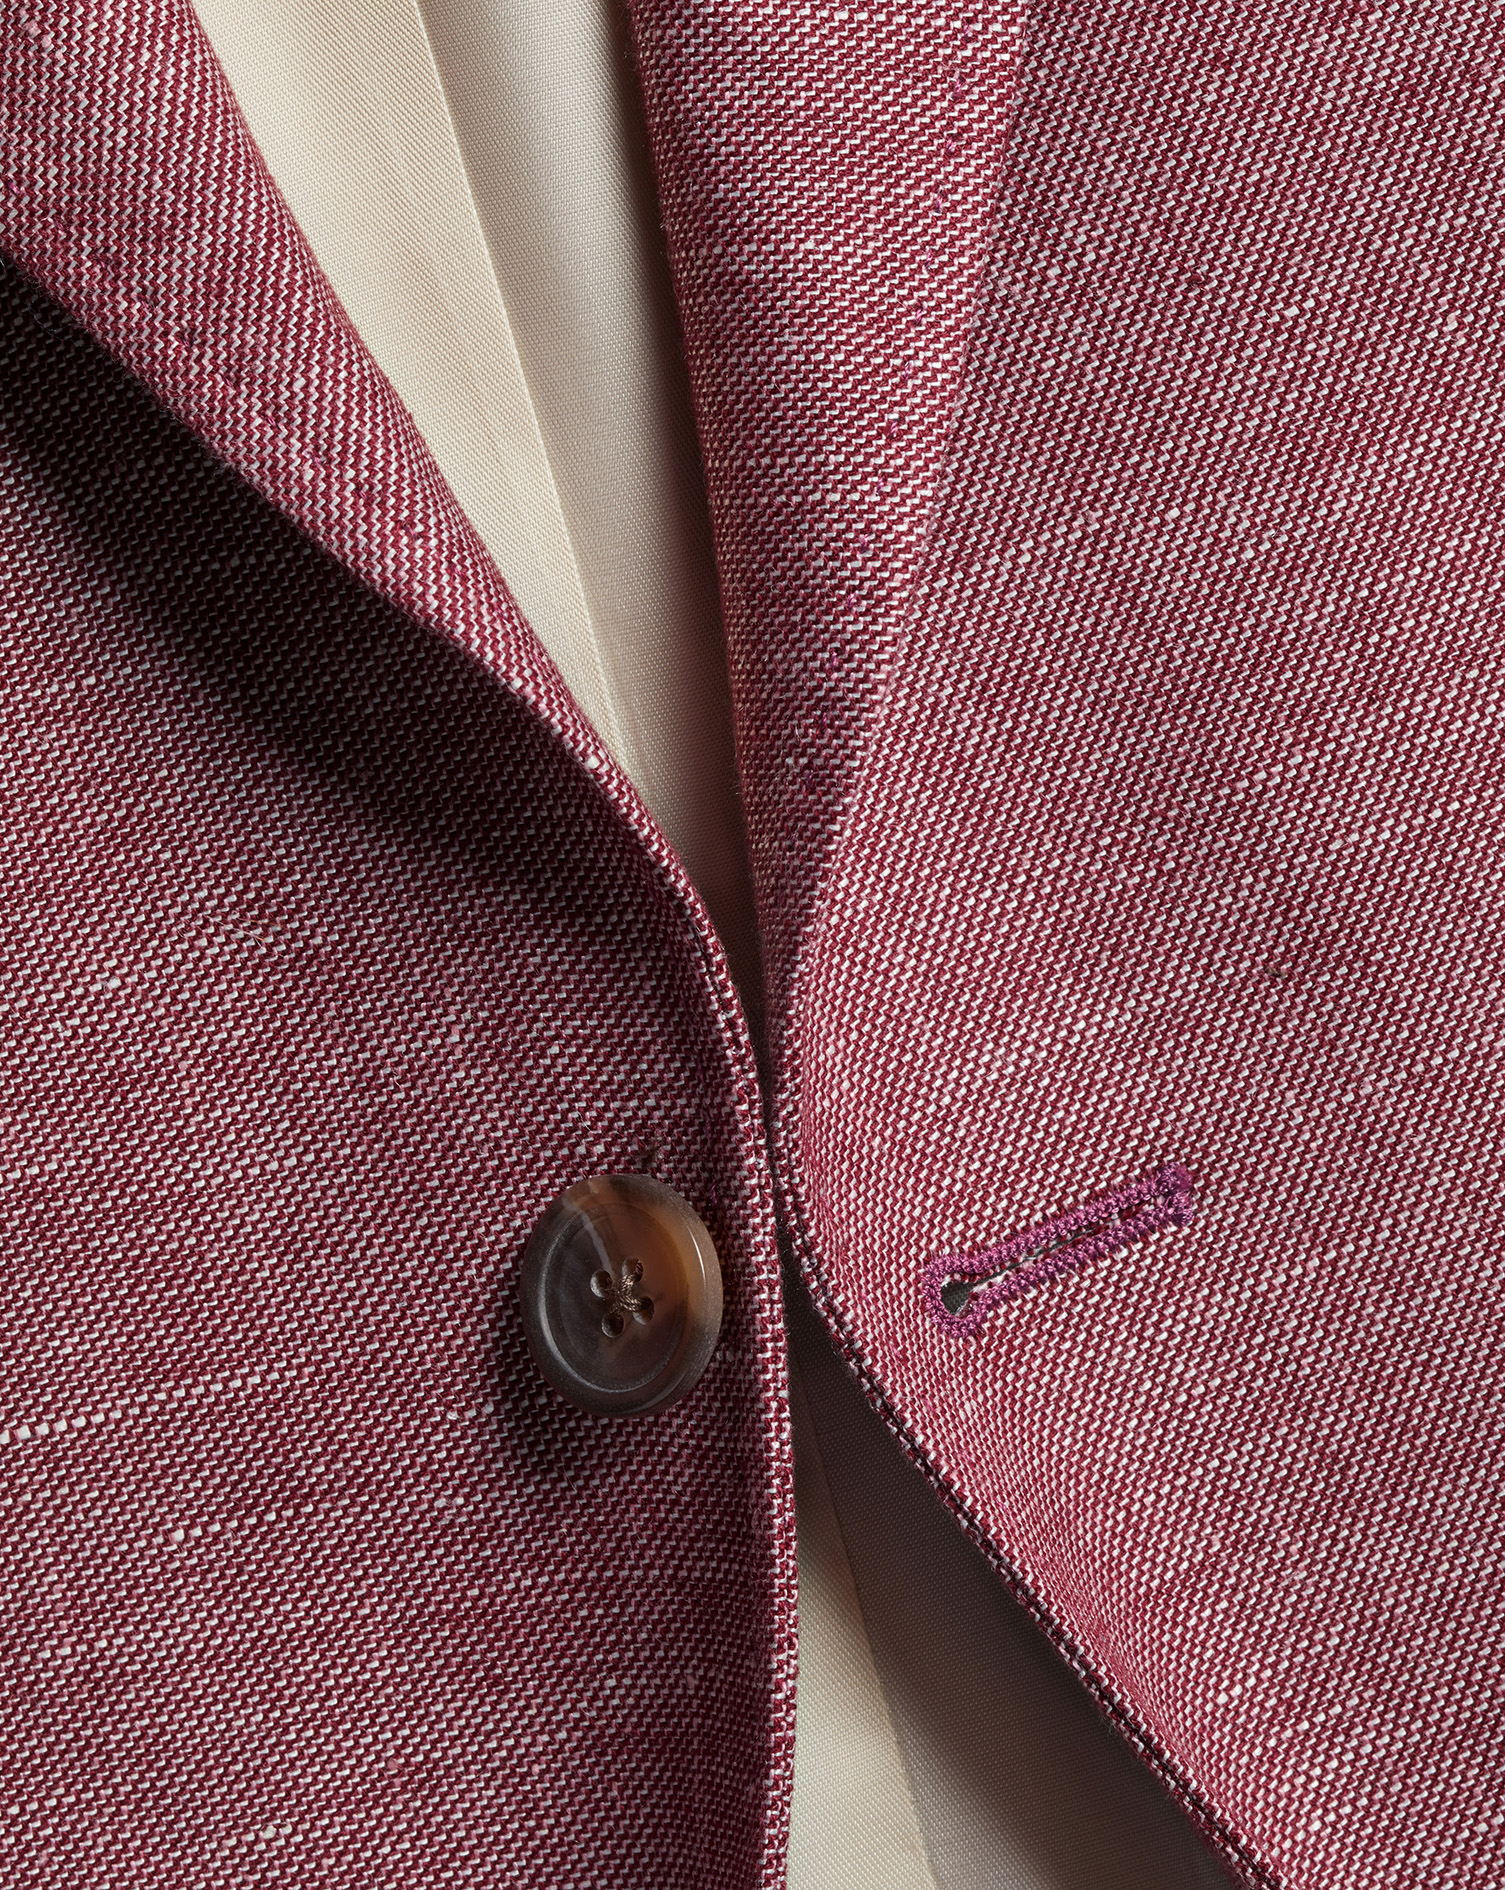 Men's Charles Tyrwhitt Cotton Jacket - Wine Red Size 42L Linen
